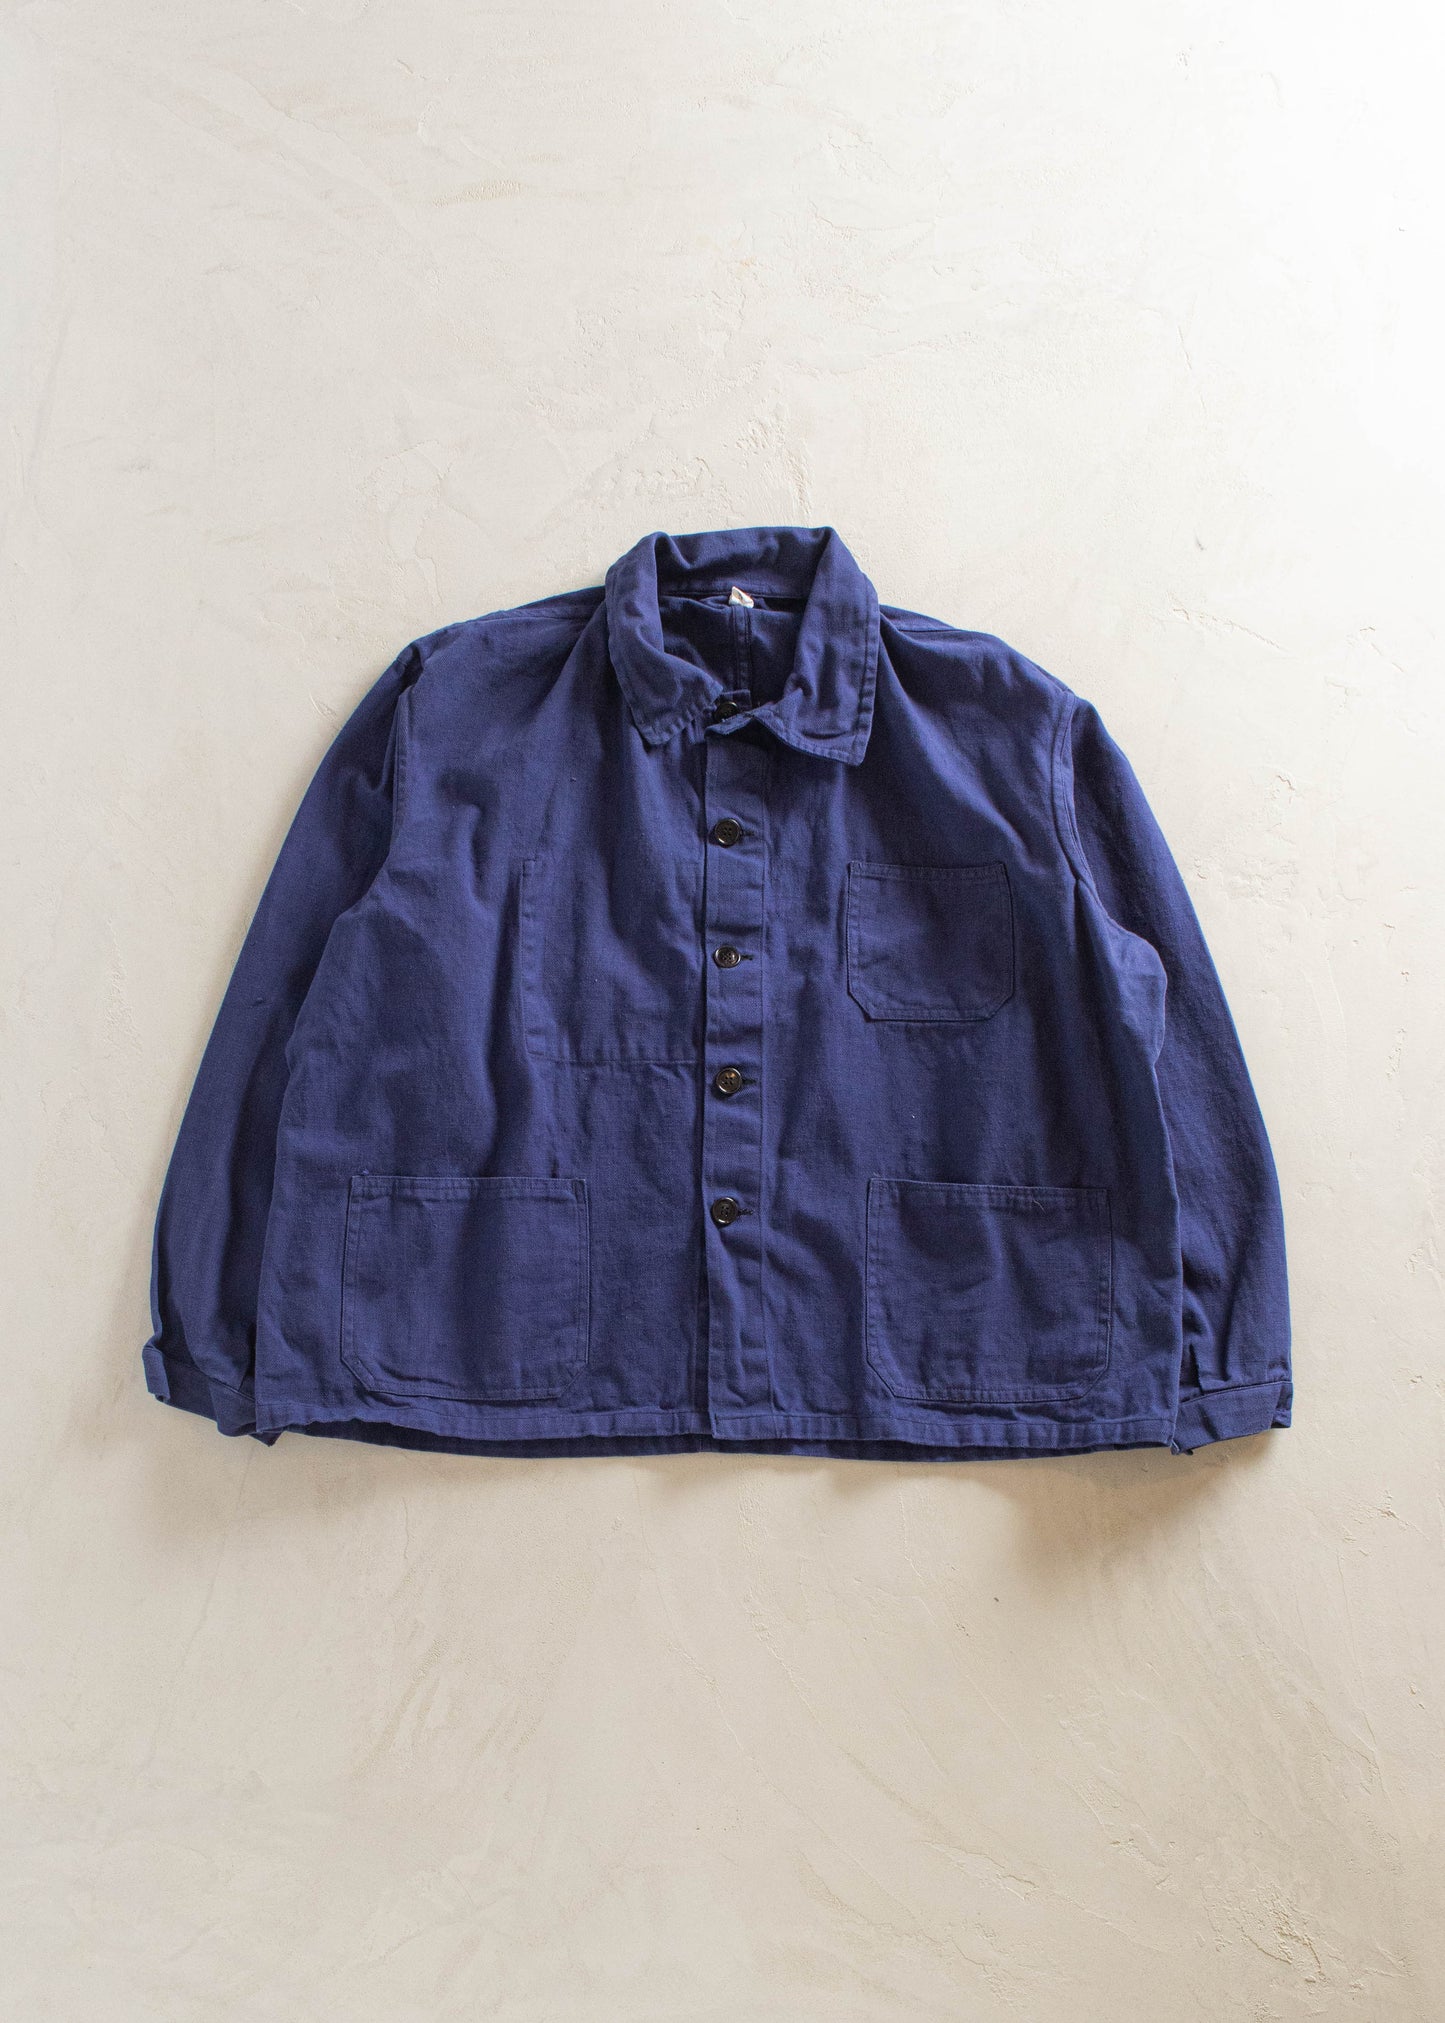 1980s French Workwear Chore Jacket Size XL/2XL